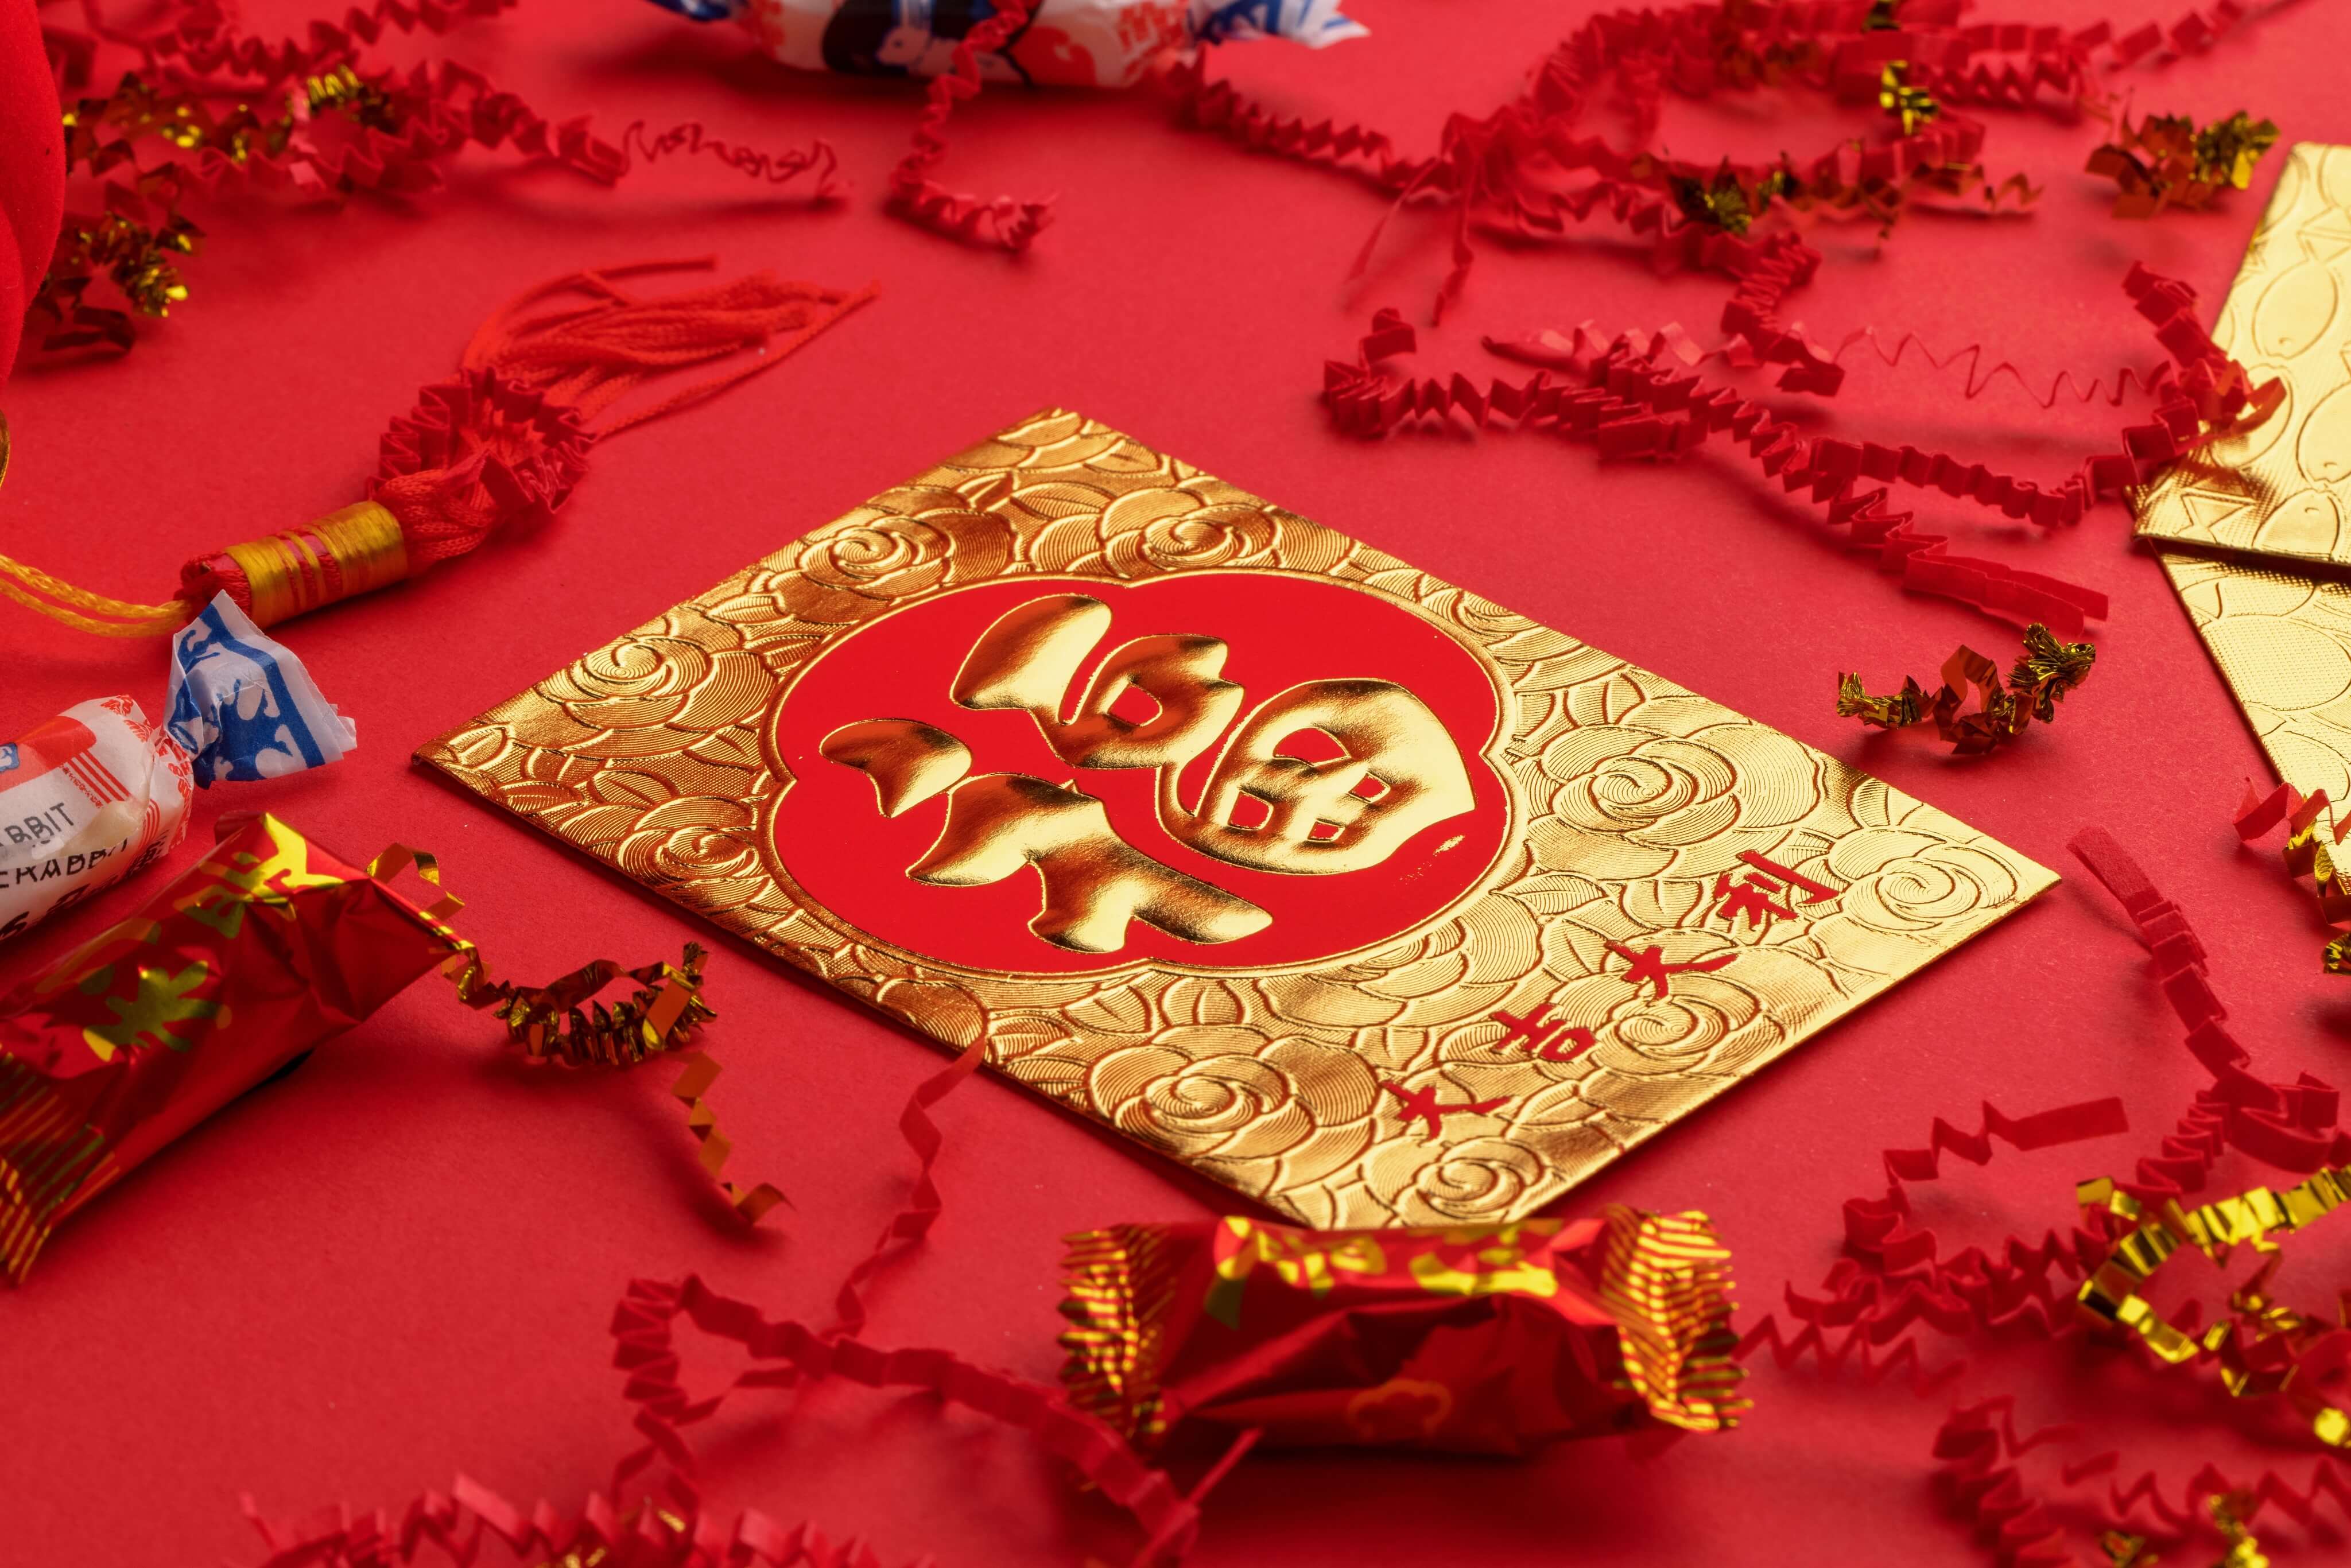 Happy Chinese New Year by Jason Leung on Unsplash